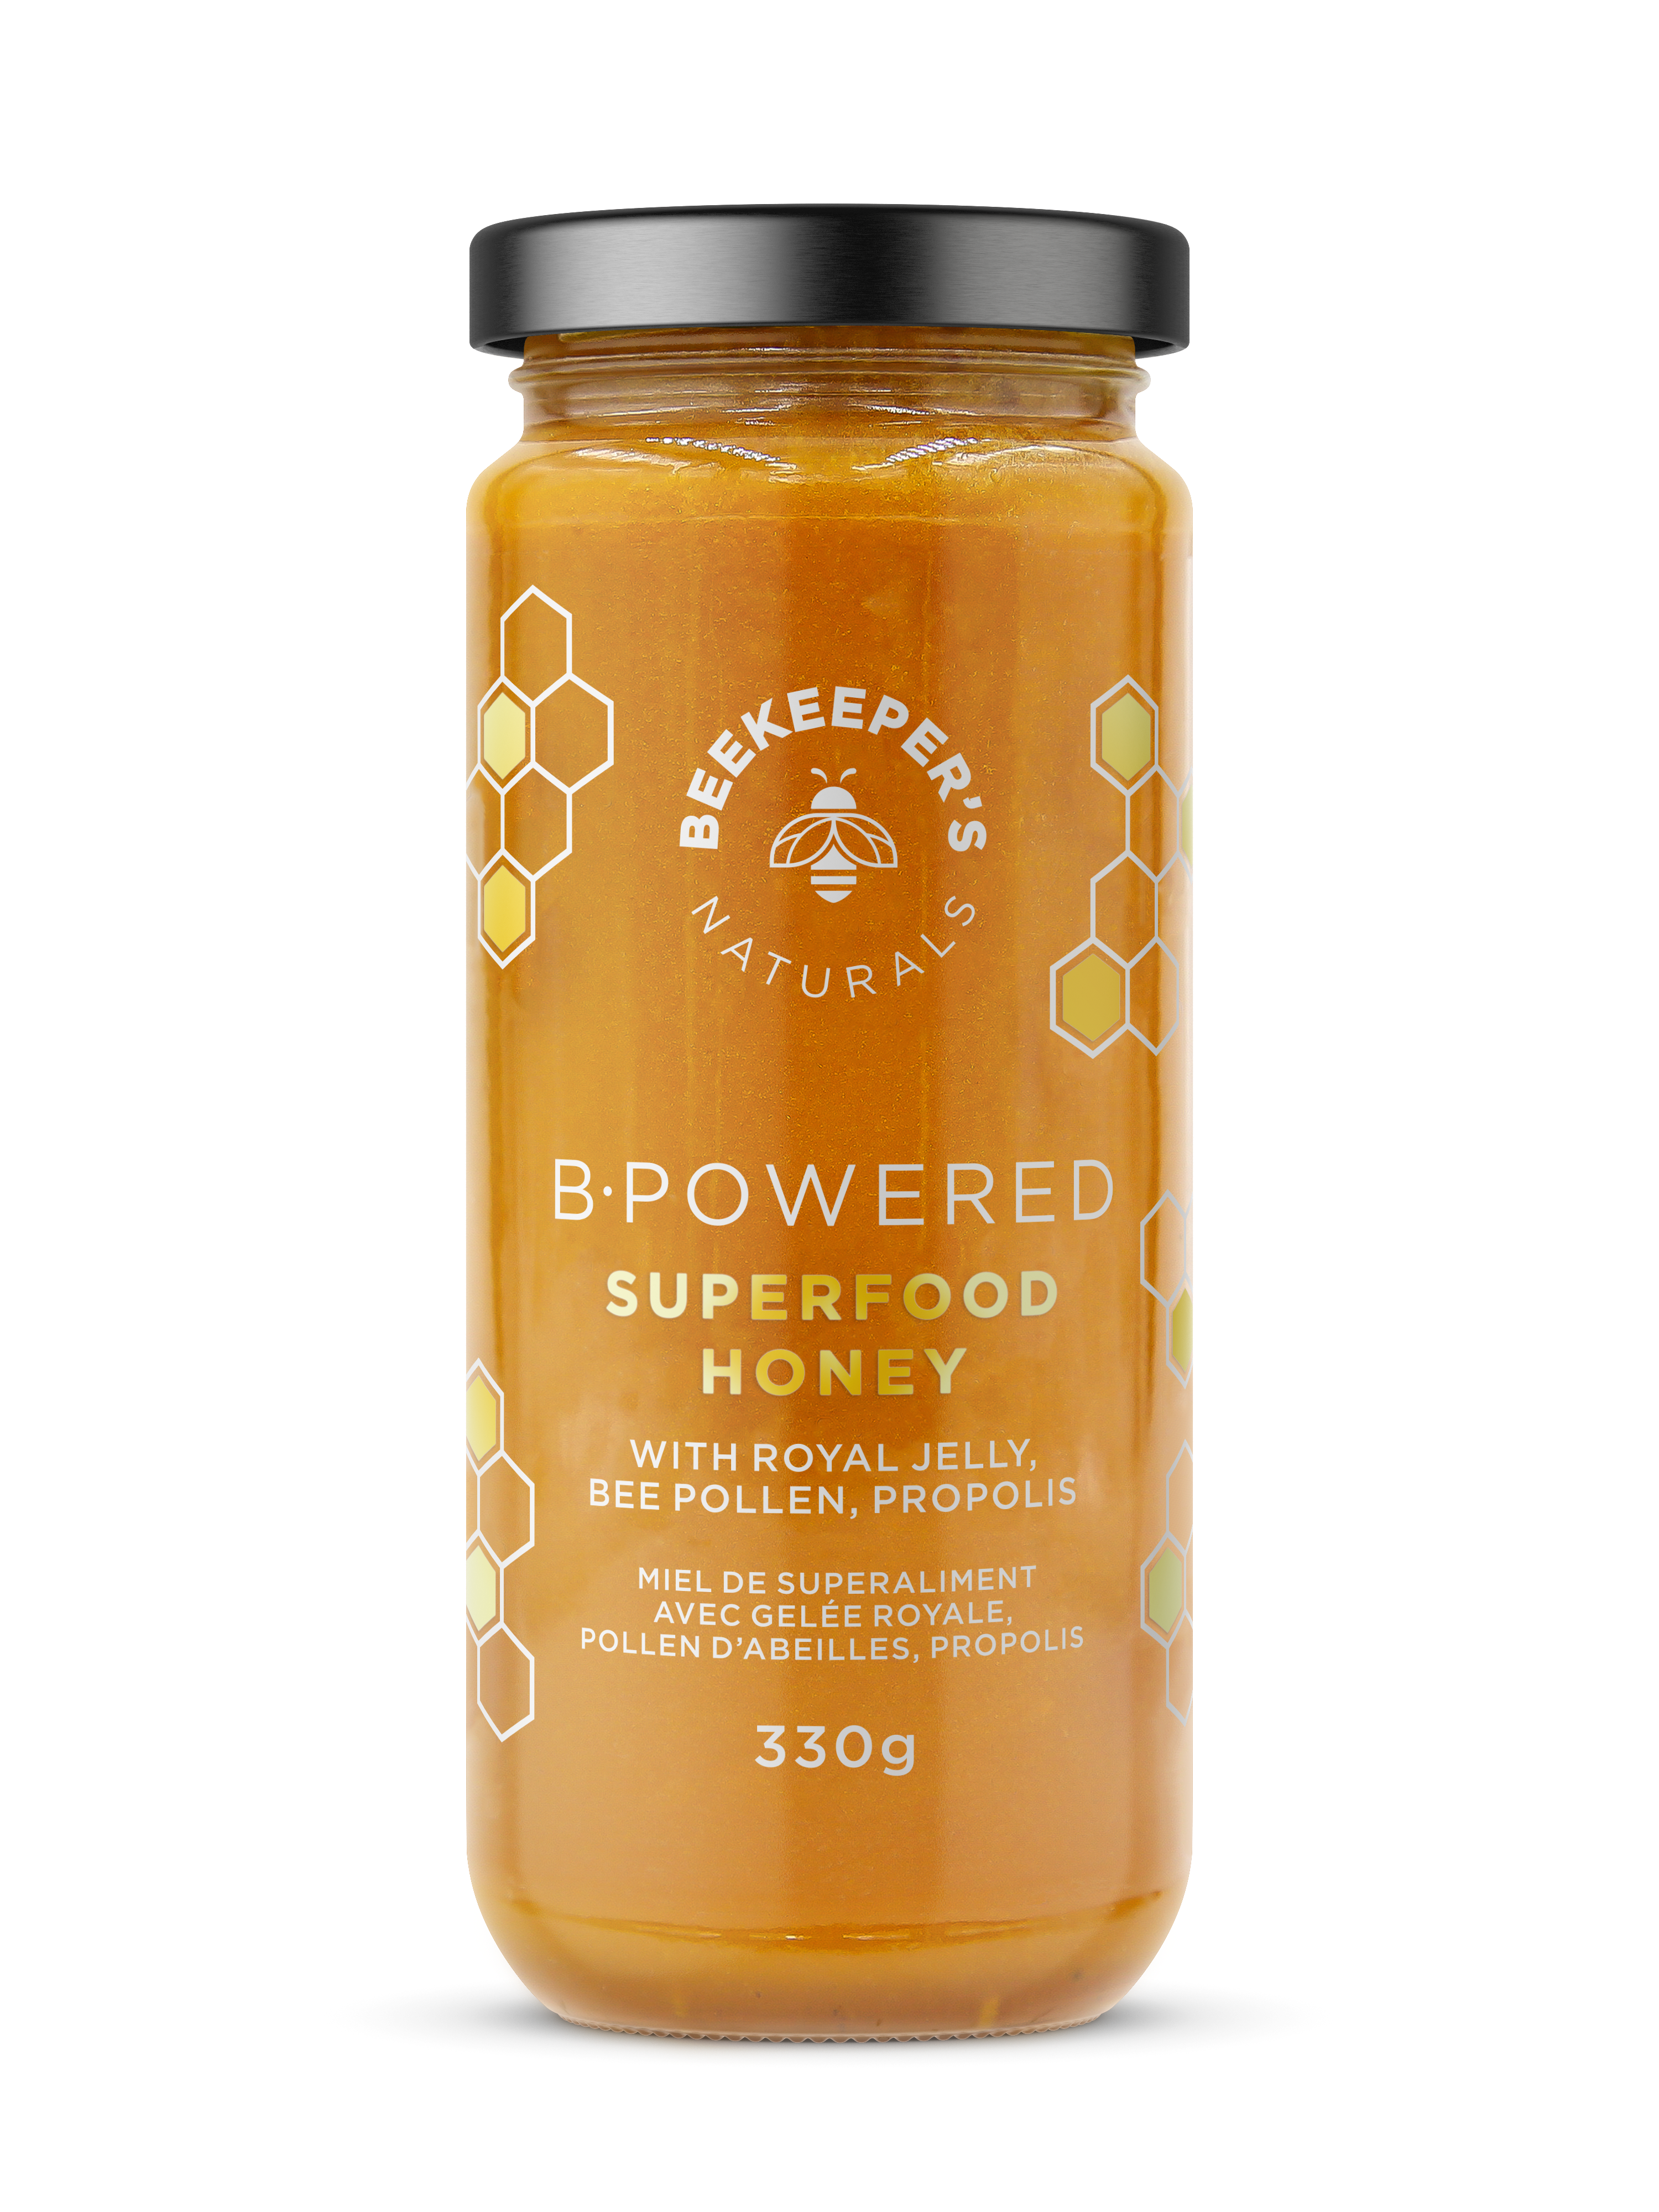 Beekeeper's B.Powered Superfood Honey 330g